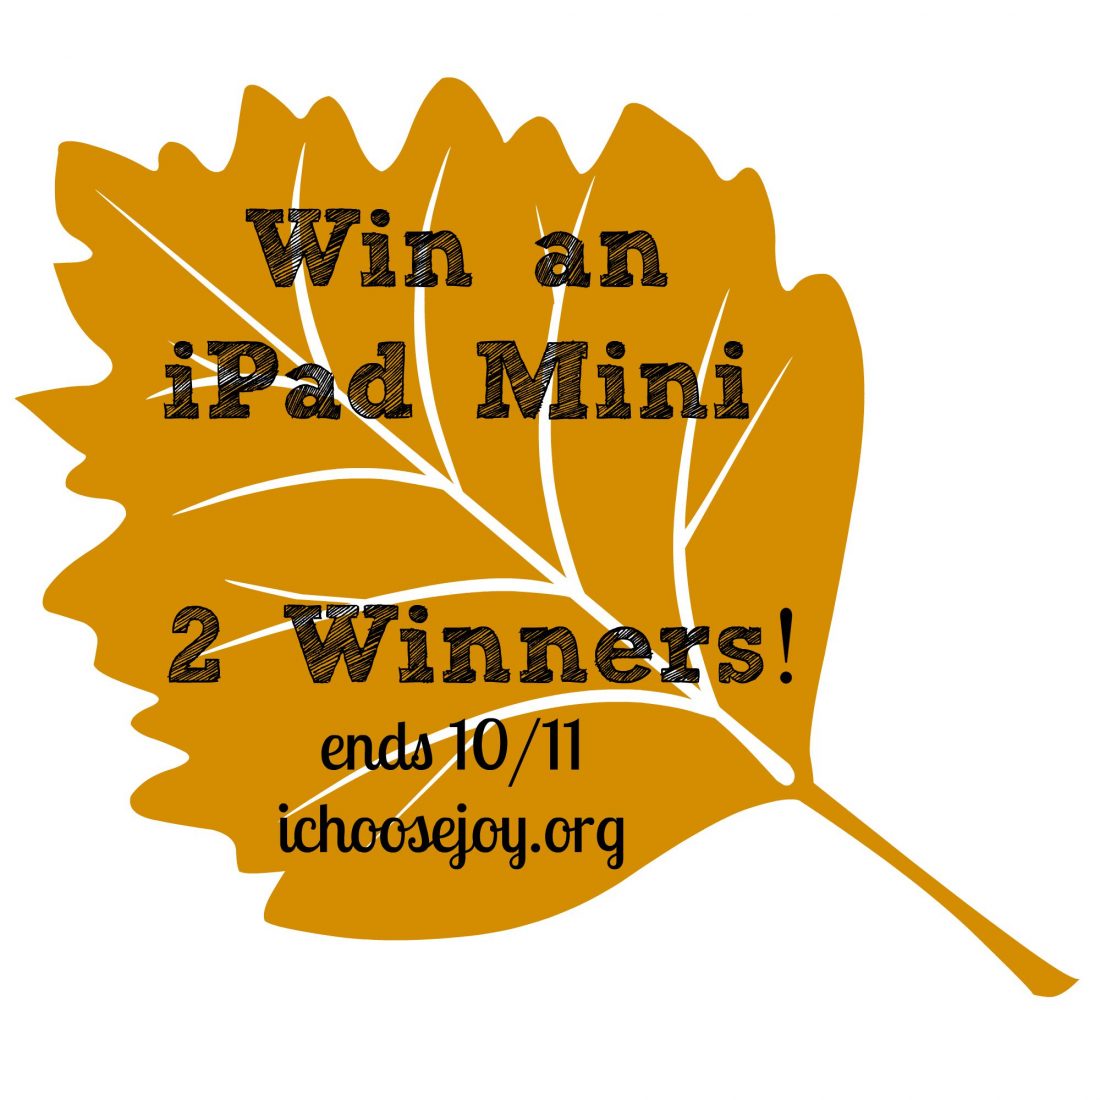 Giveaway: iPad Mini to 2 different winners!